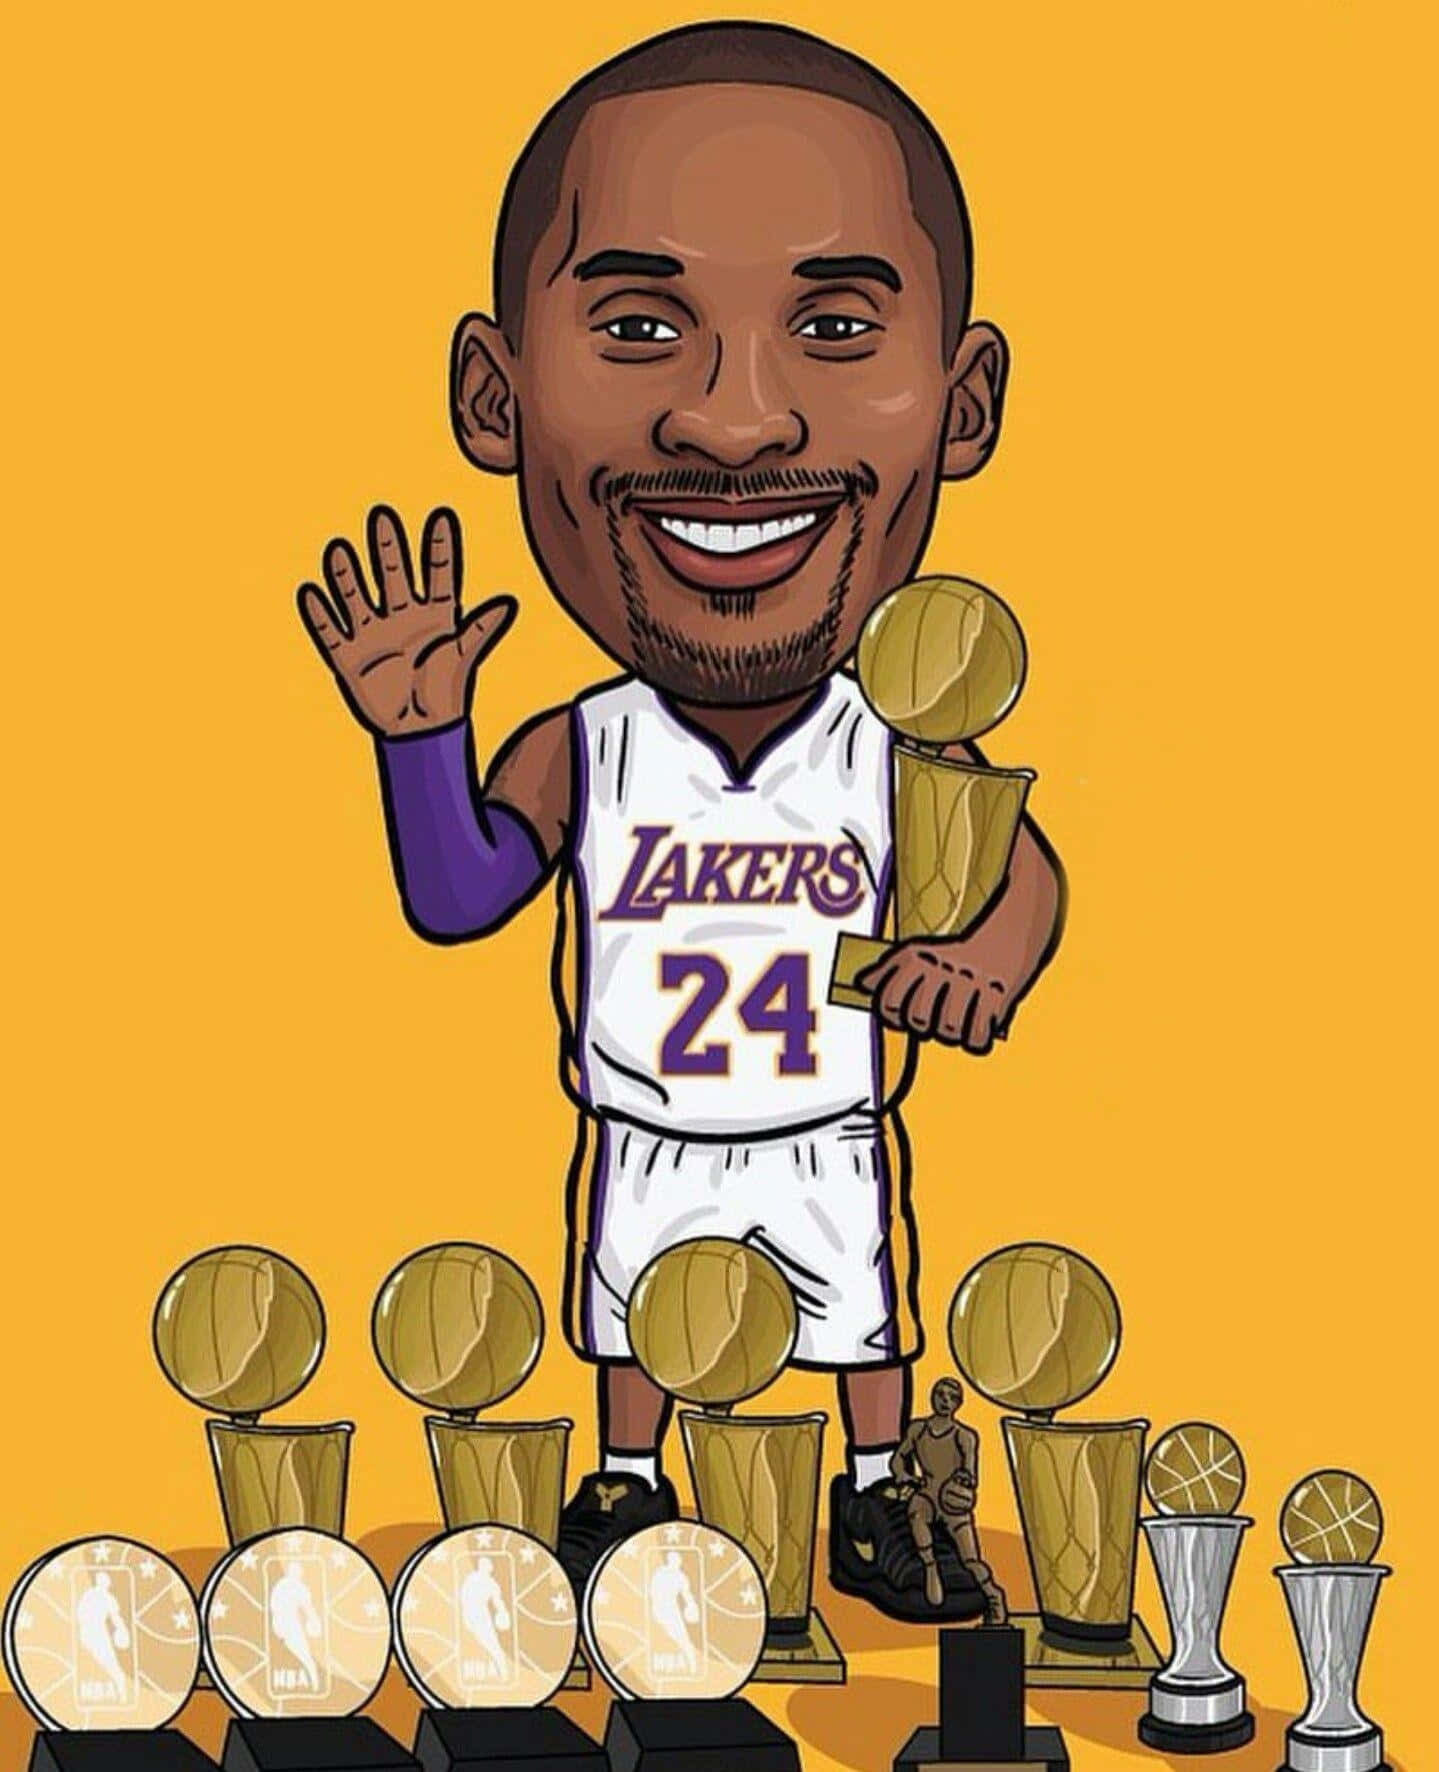 100+] Kobe Bryant Cartoon Wallpapers